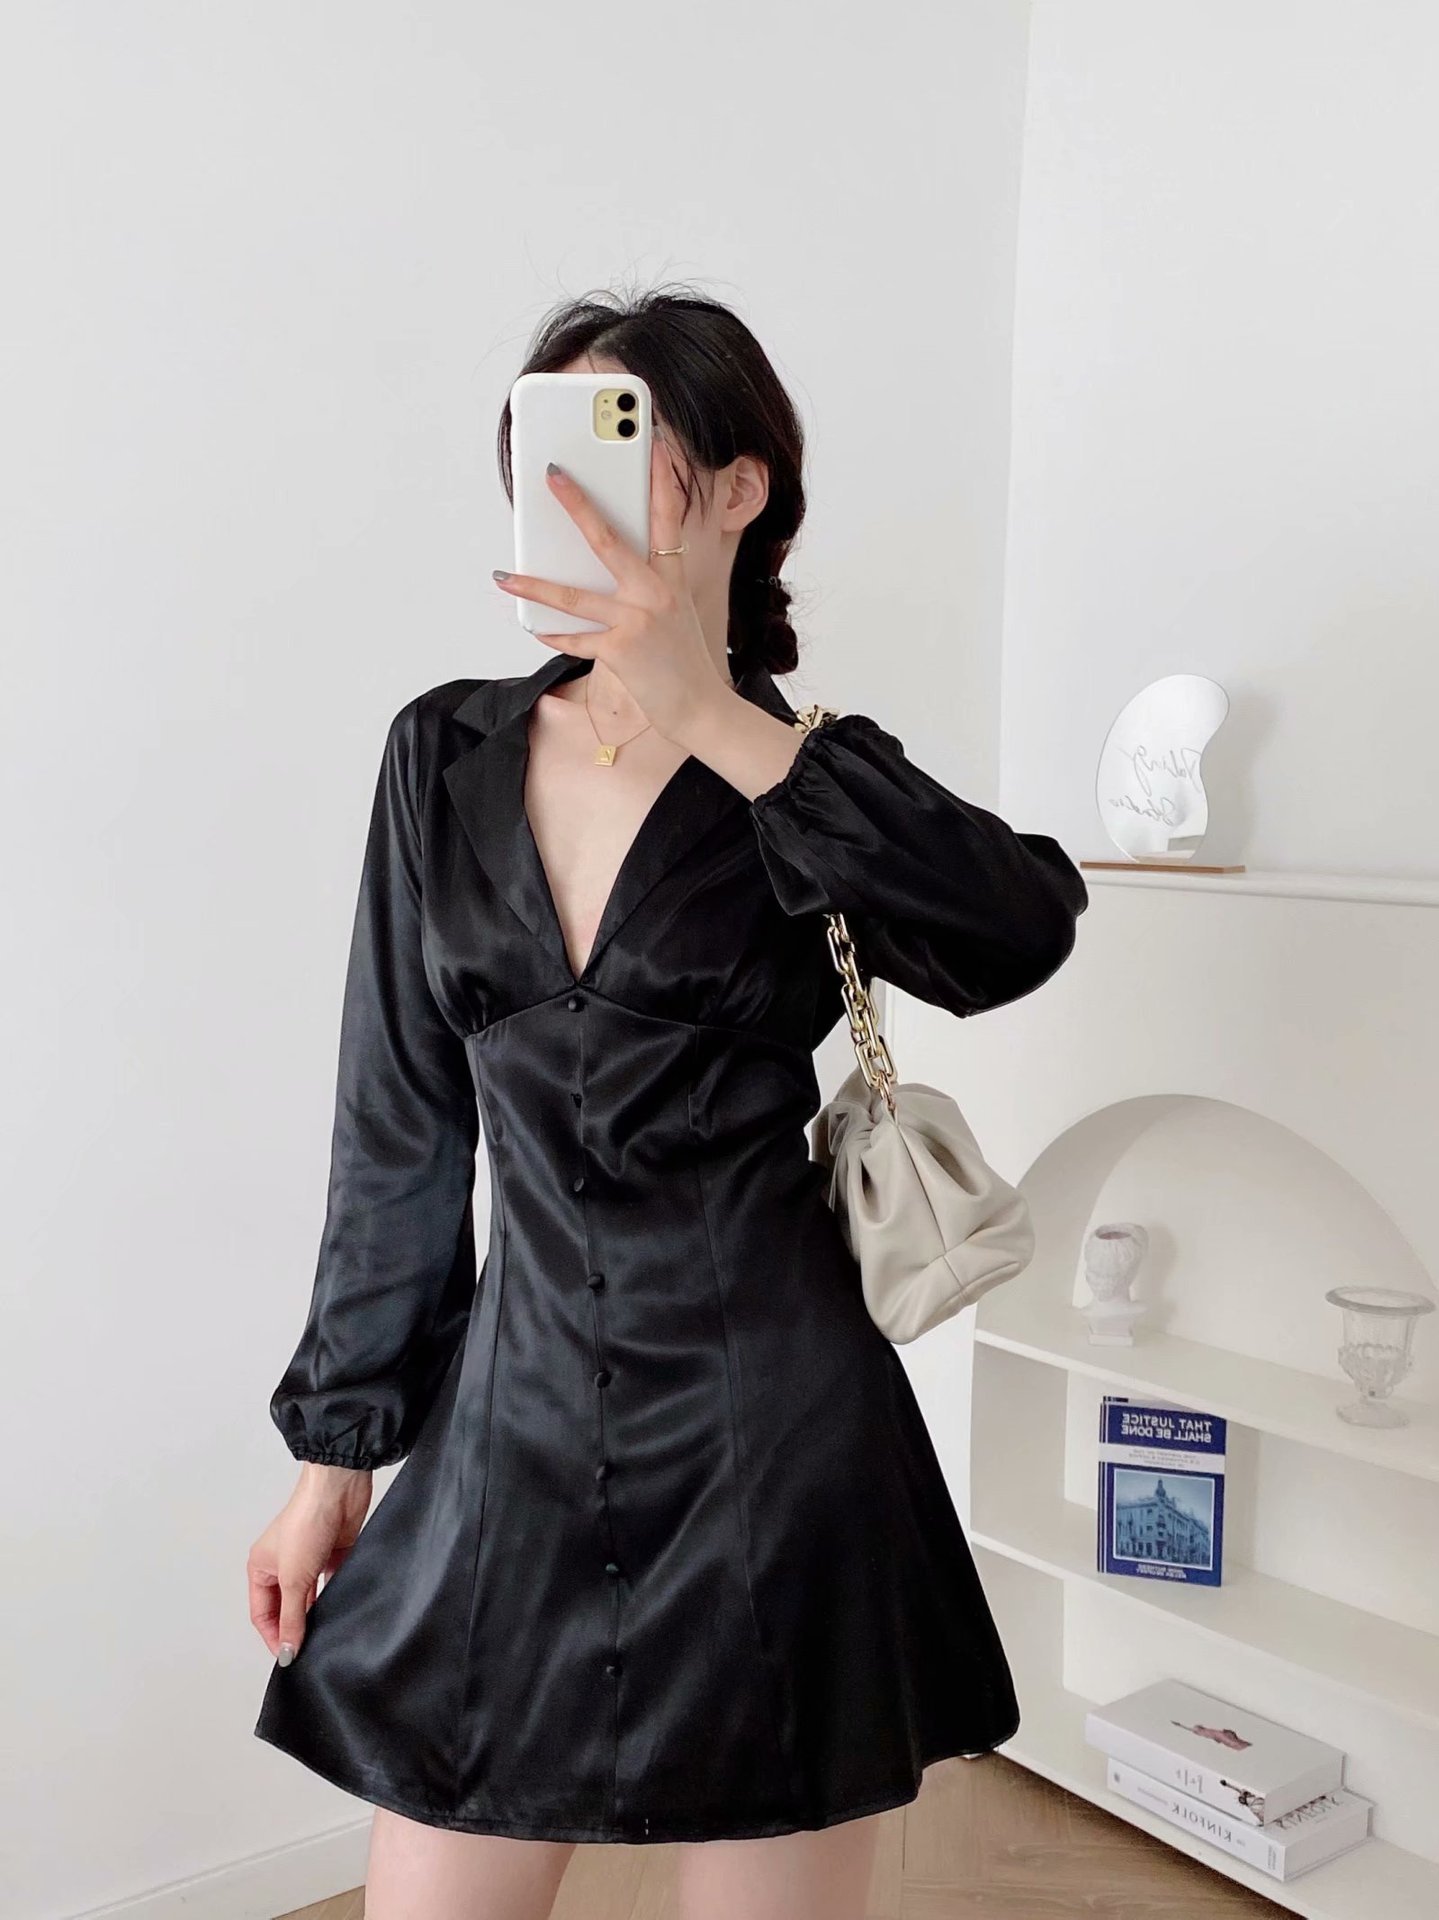 women s silk satin texture waist dress nihaostyles clothing wholesale NSAM72084